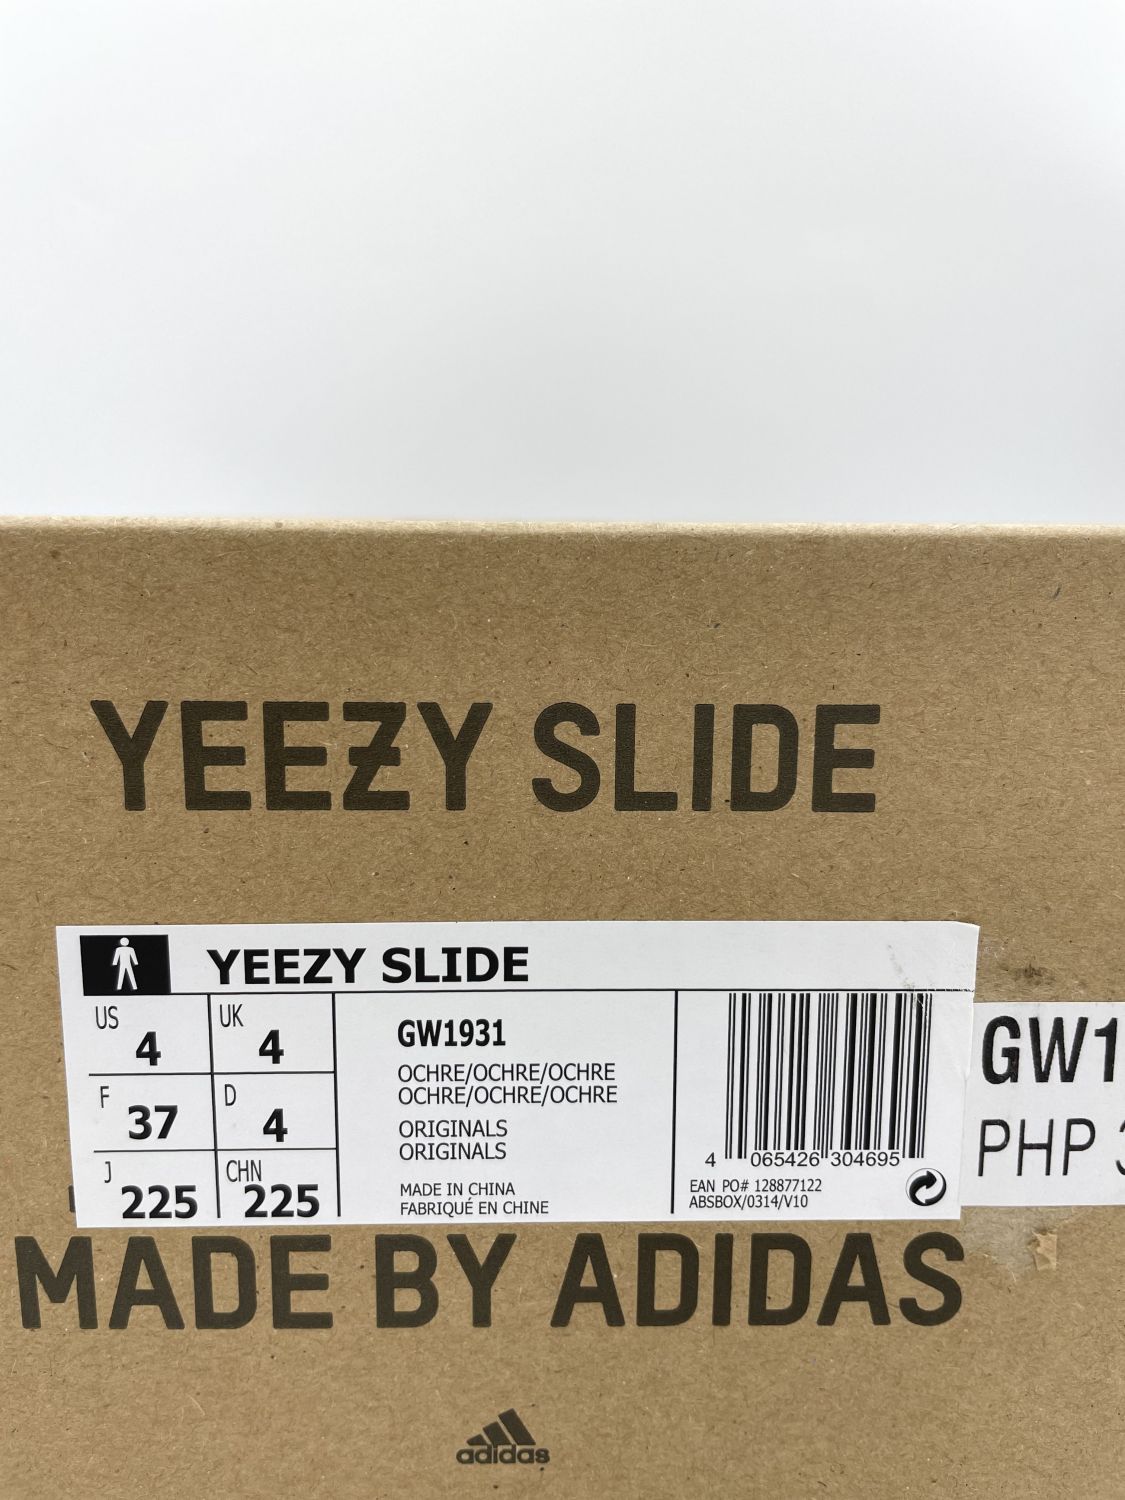 9094 - adidas Yeezy Slide Ochre | Item Details - AfterMarket